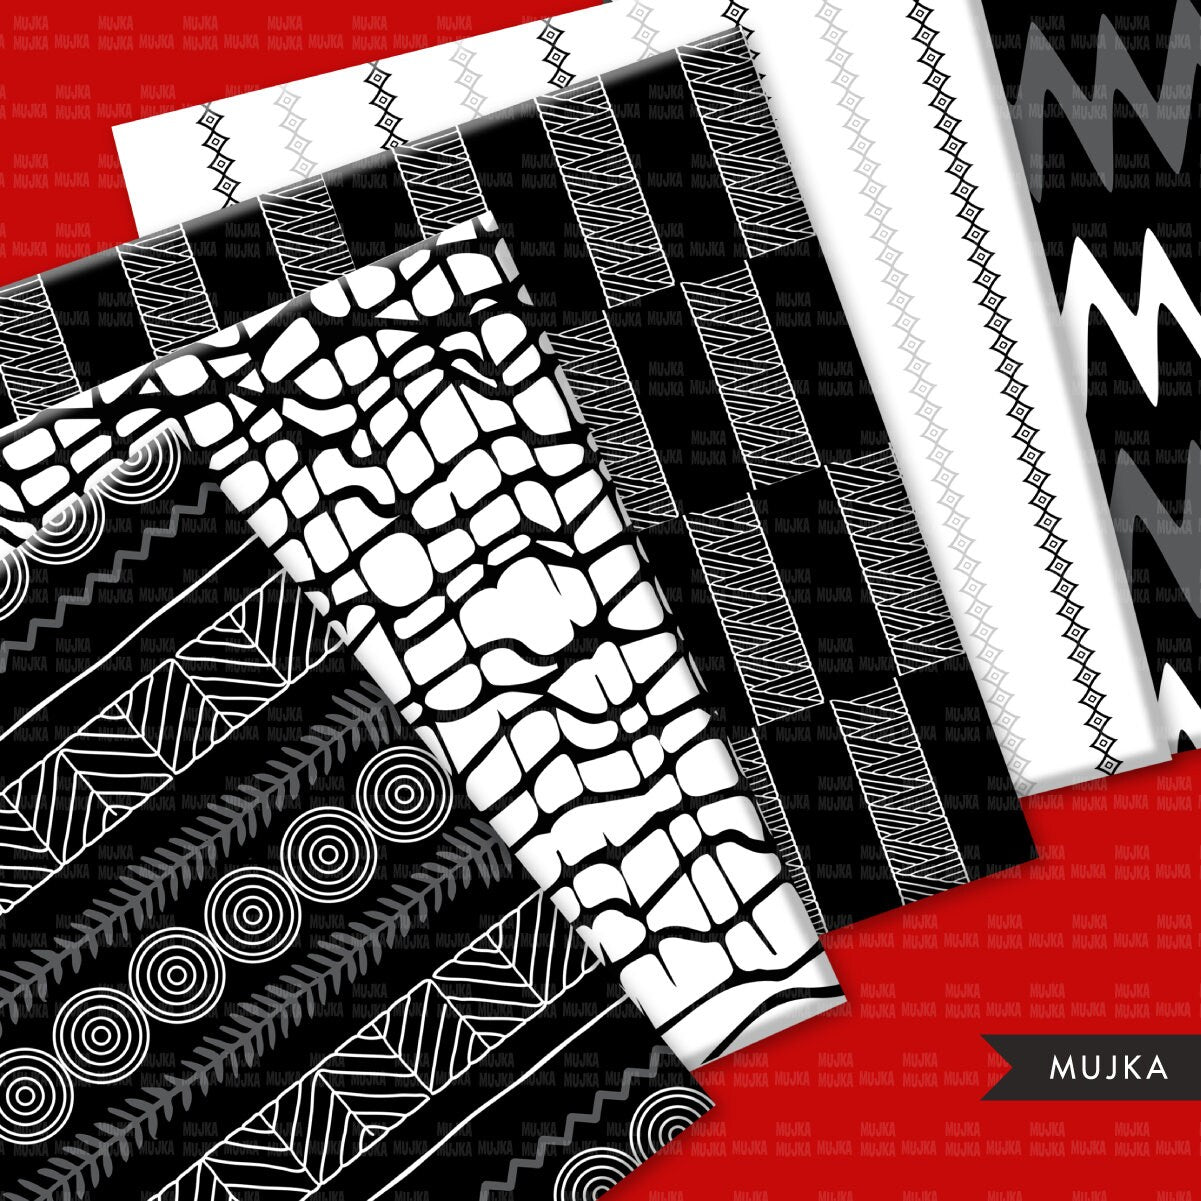 Masculine digital papers, men's digital patterns, seamless scrapbook p –  MUJKA CLIPARTS